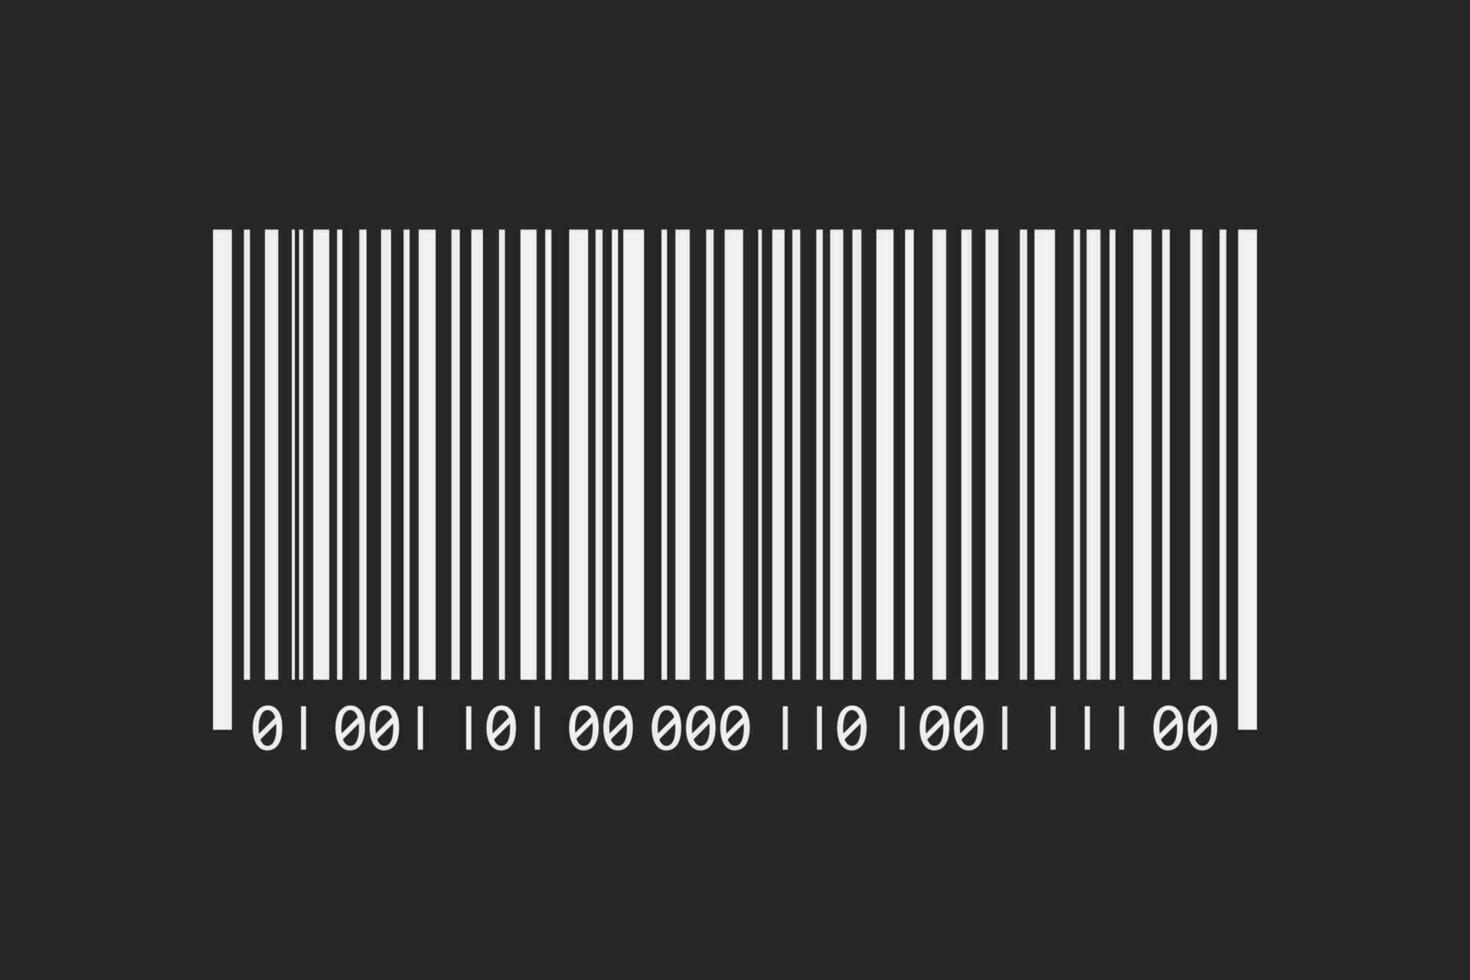 Barcode illustration on black background vector